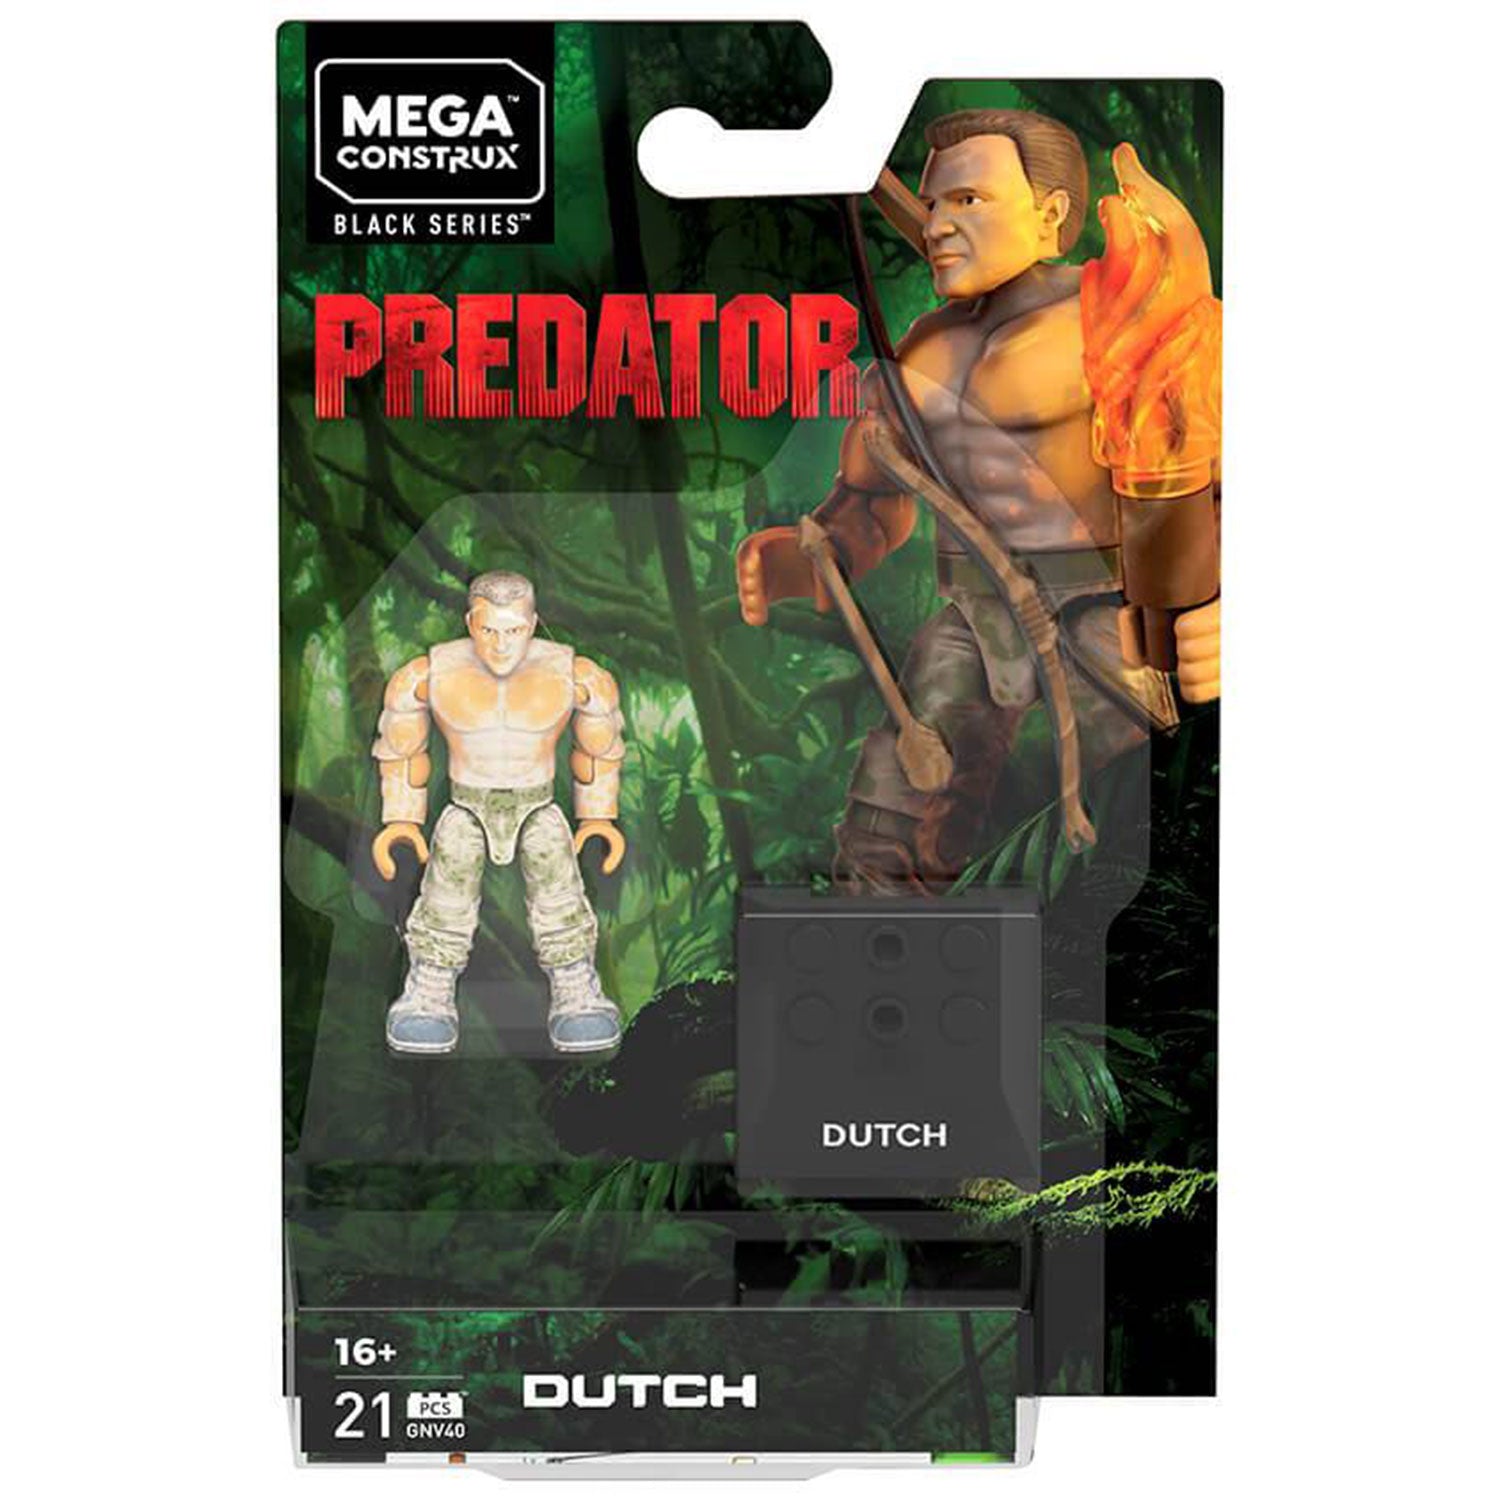 Dutch - Mega Construx Predator Black Series Figure Pack [RETIRED]